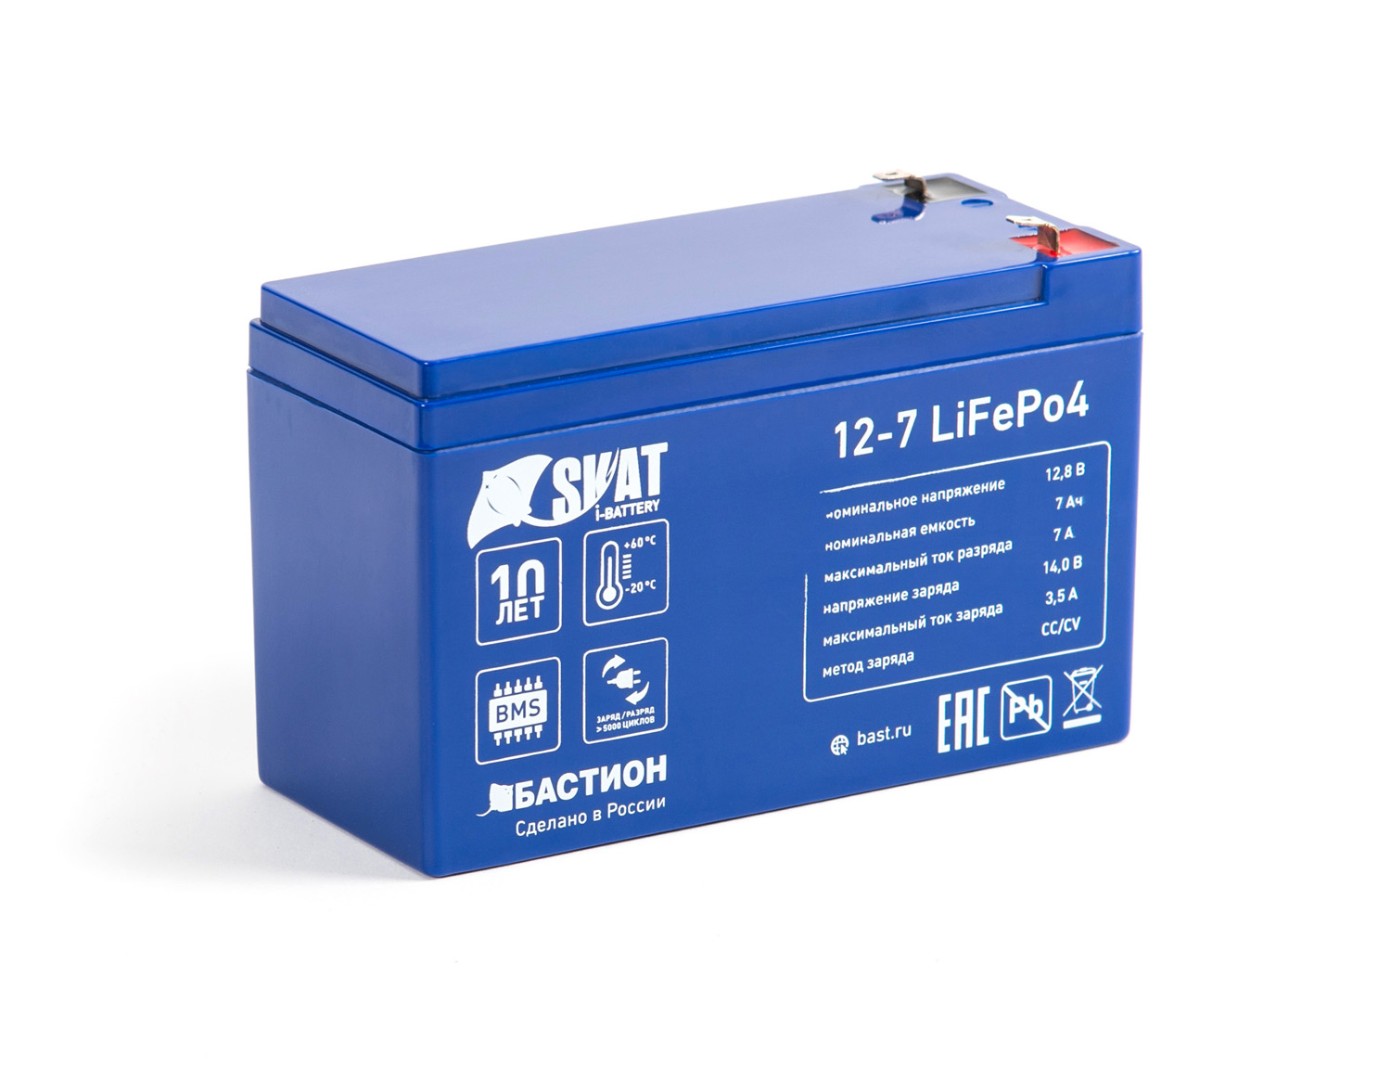 Аккумулятор 12в 4ач. АКБ lifepo4. Skat-i-Battery 12-7 lifepo4. Аккумулятор литий-ионный 12v. Lifepo4 аккумулятор 12в.